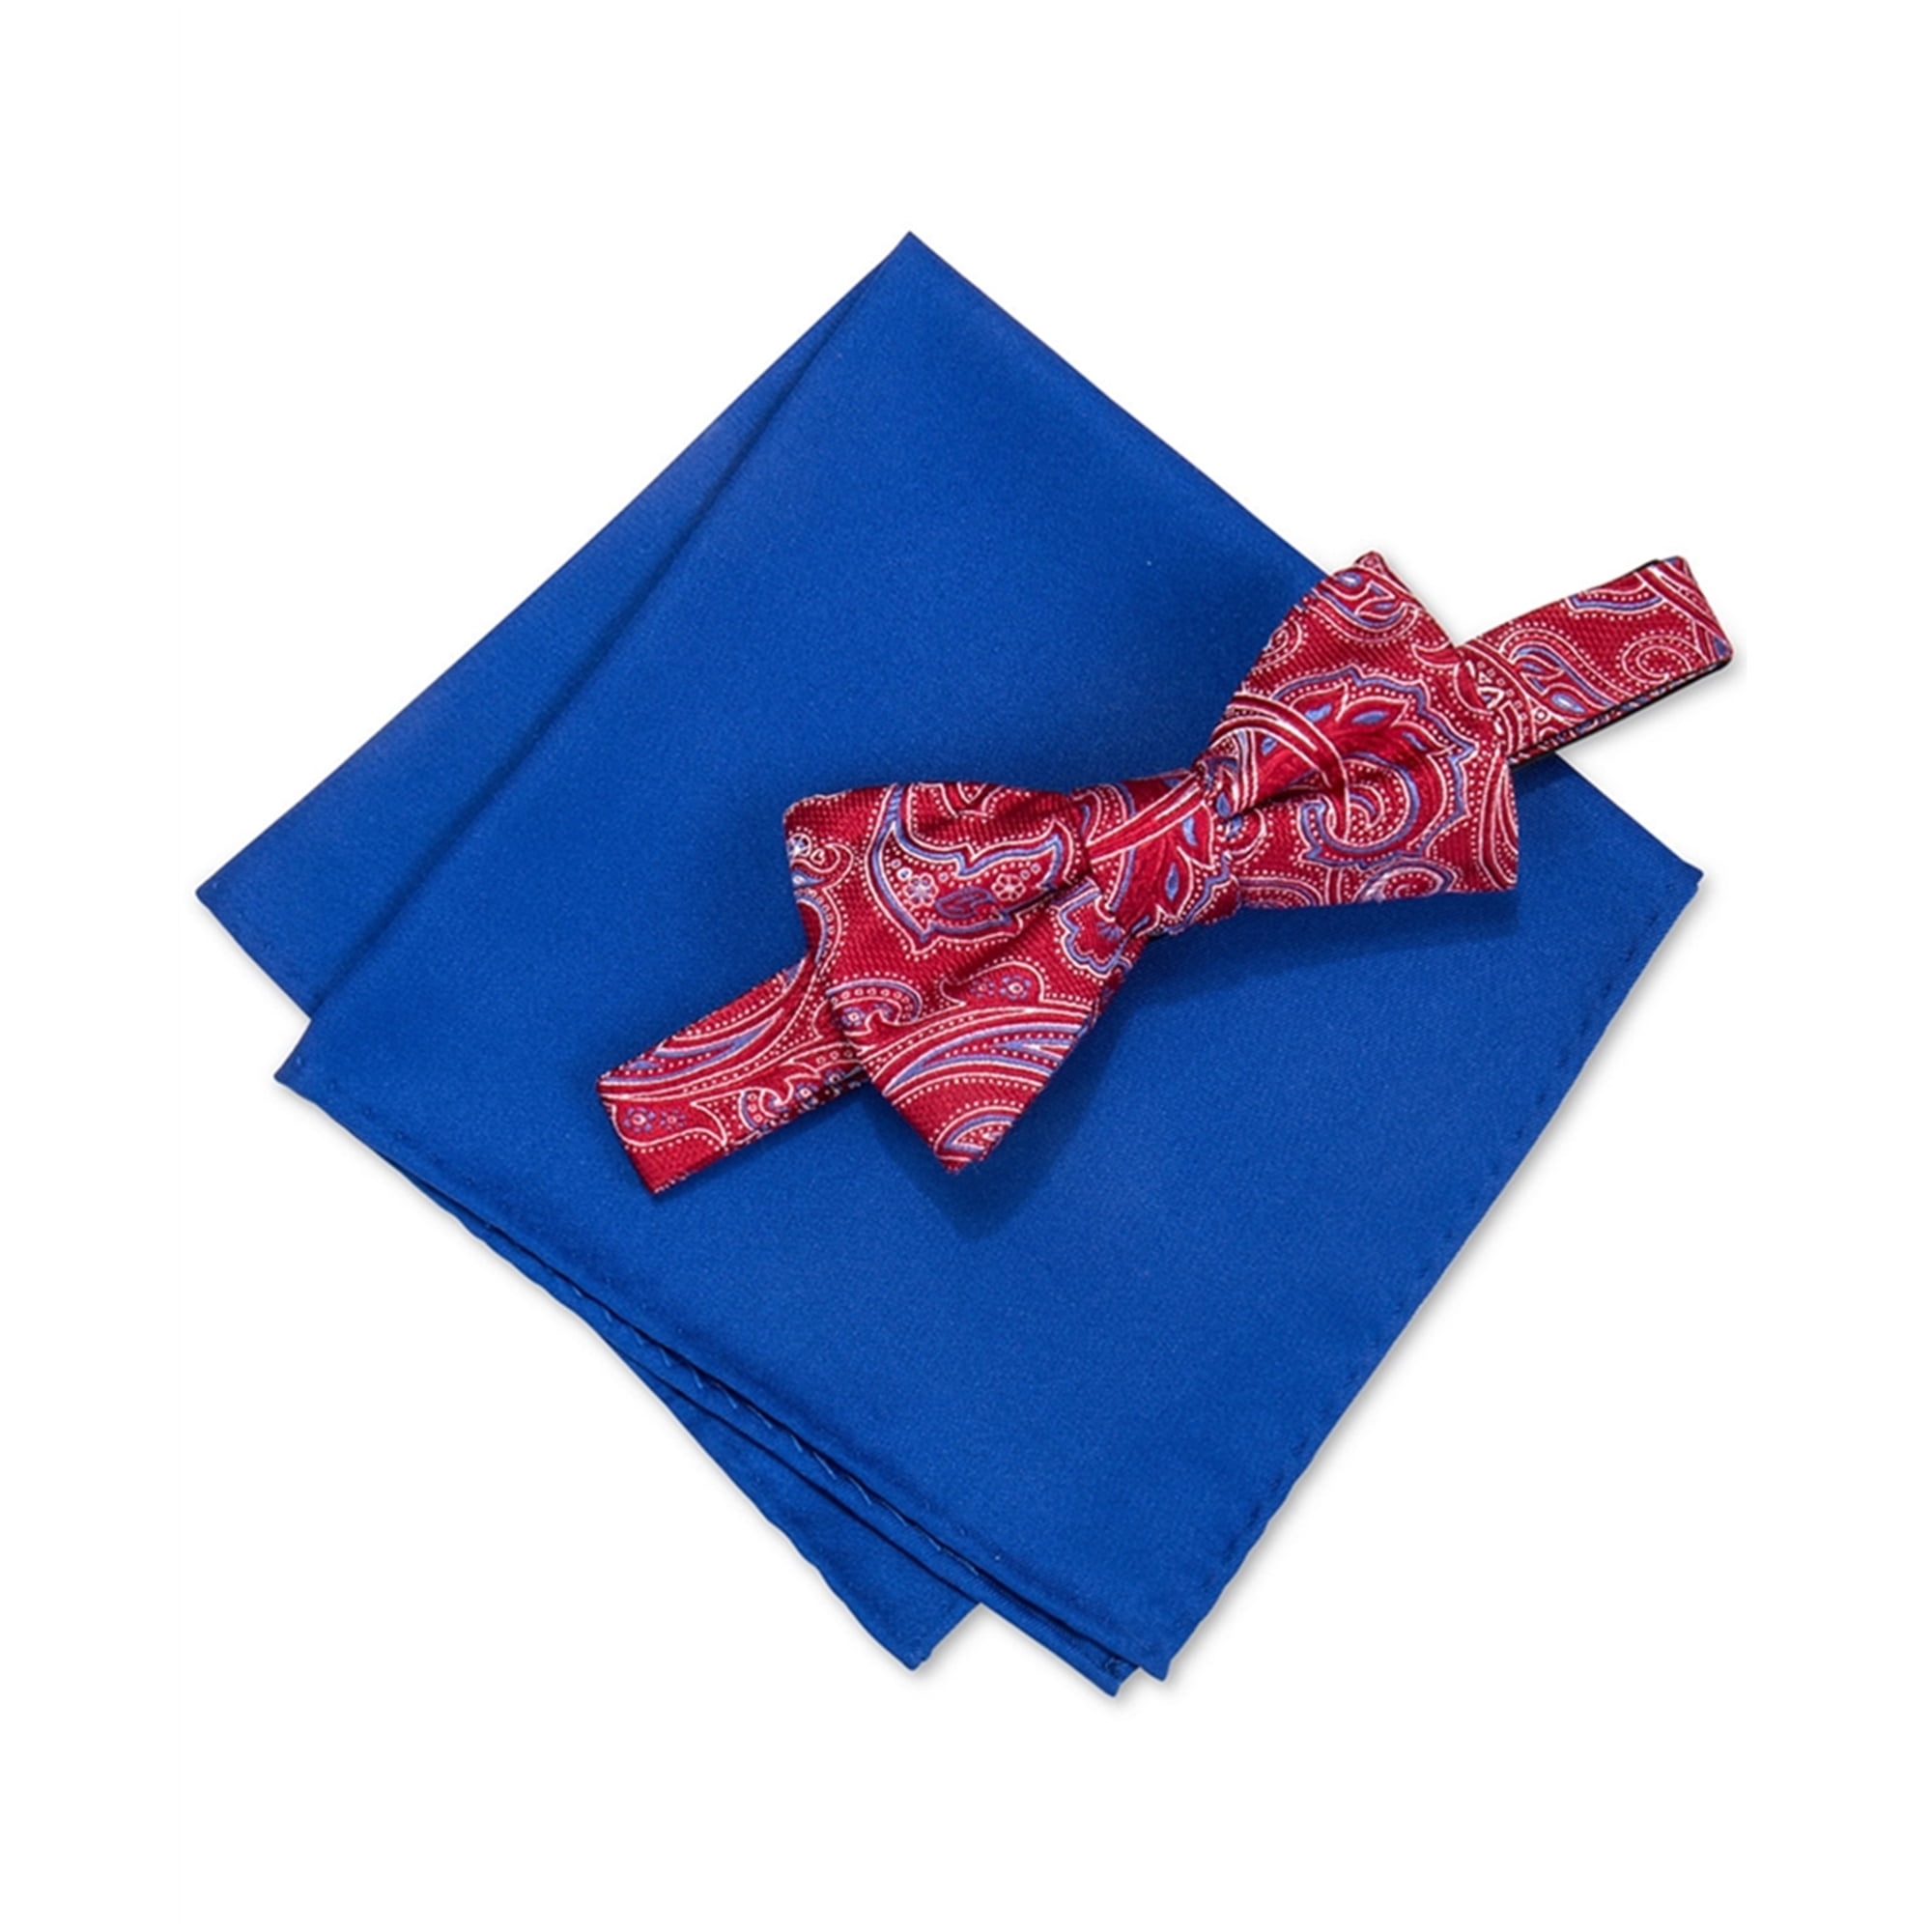 $124 Countess Mara Men Beige Blue Striped Silk Neck Tie Skinny Necktie 58x3.25 